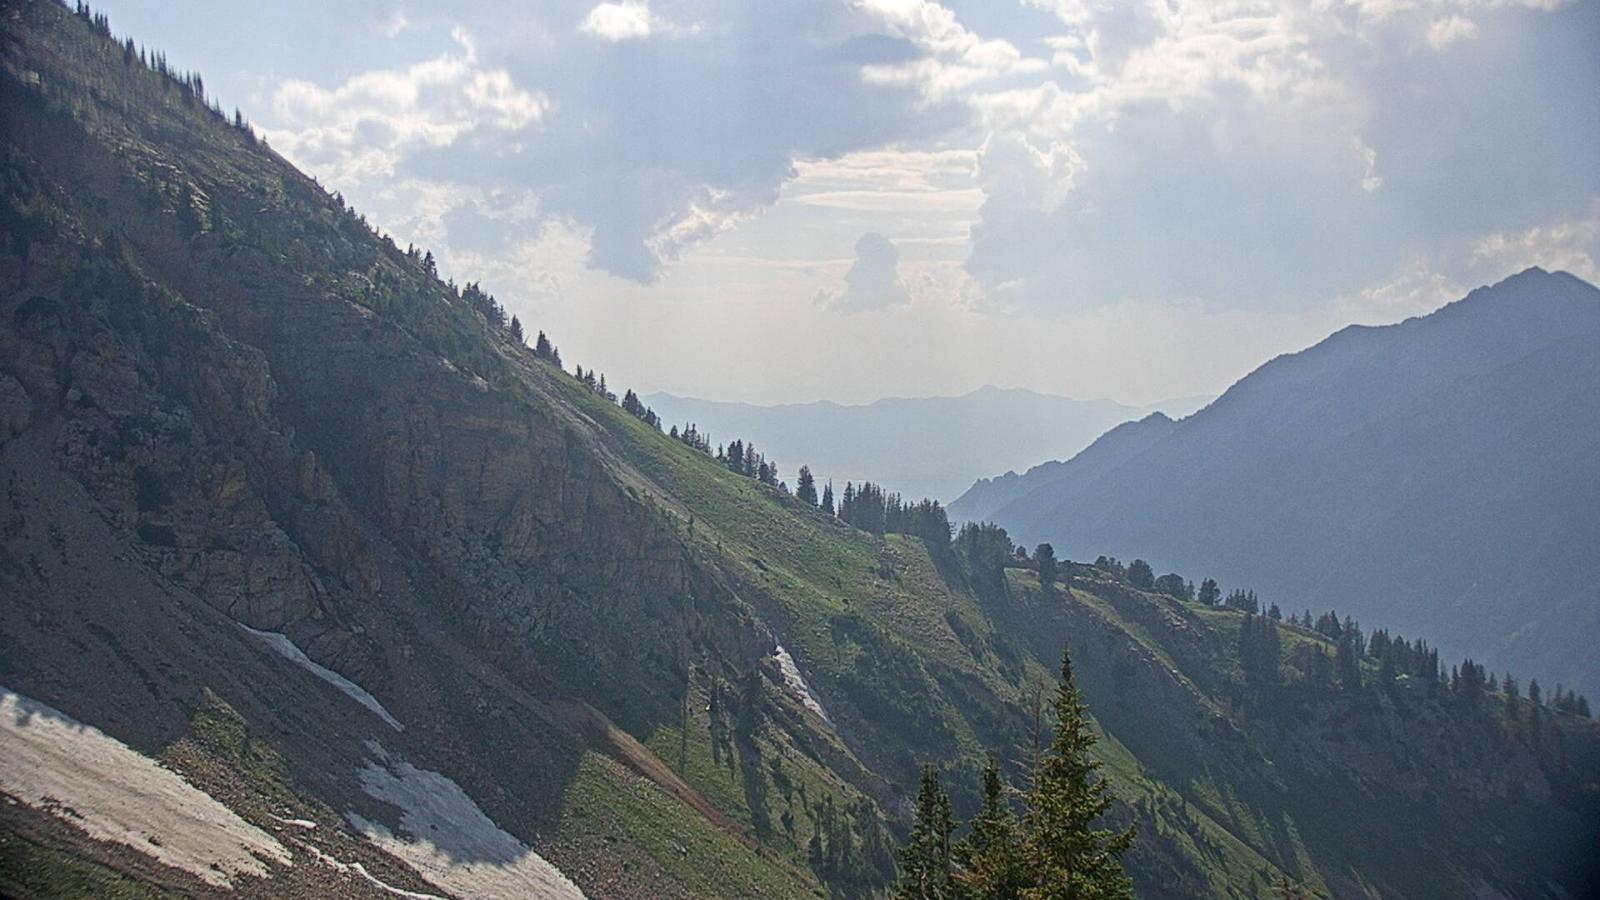 Webcam Alta: Salt lake valley